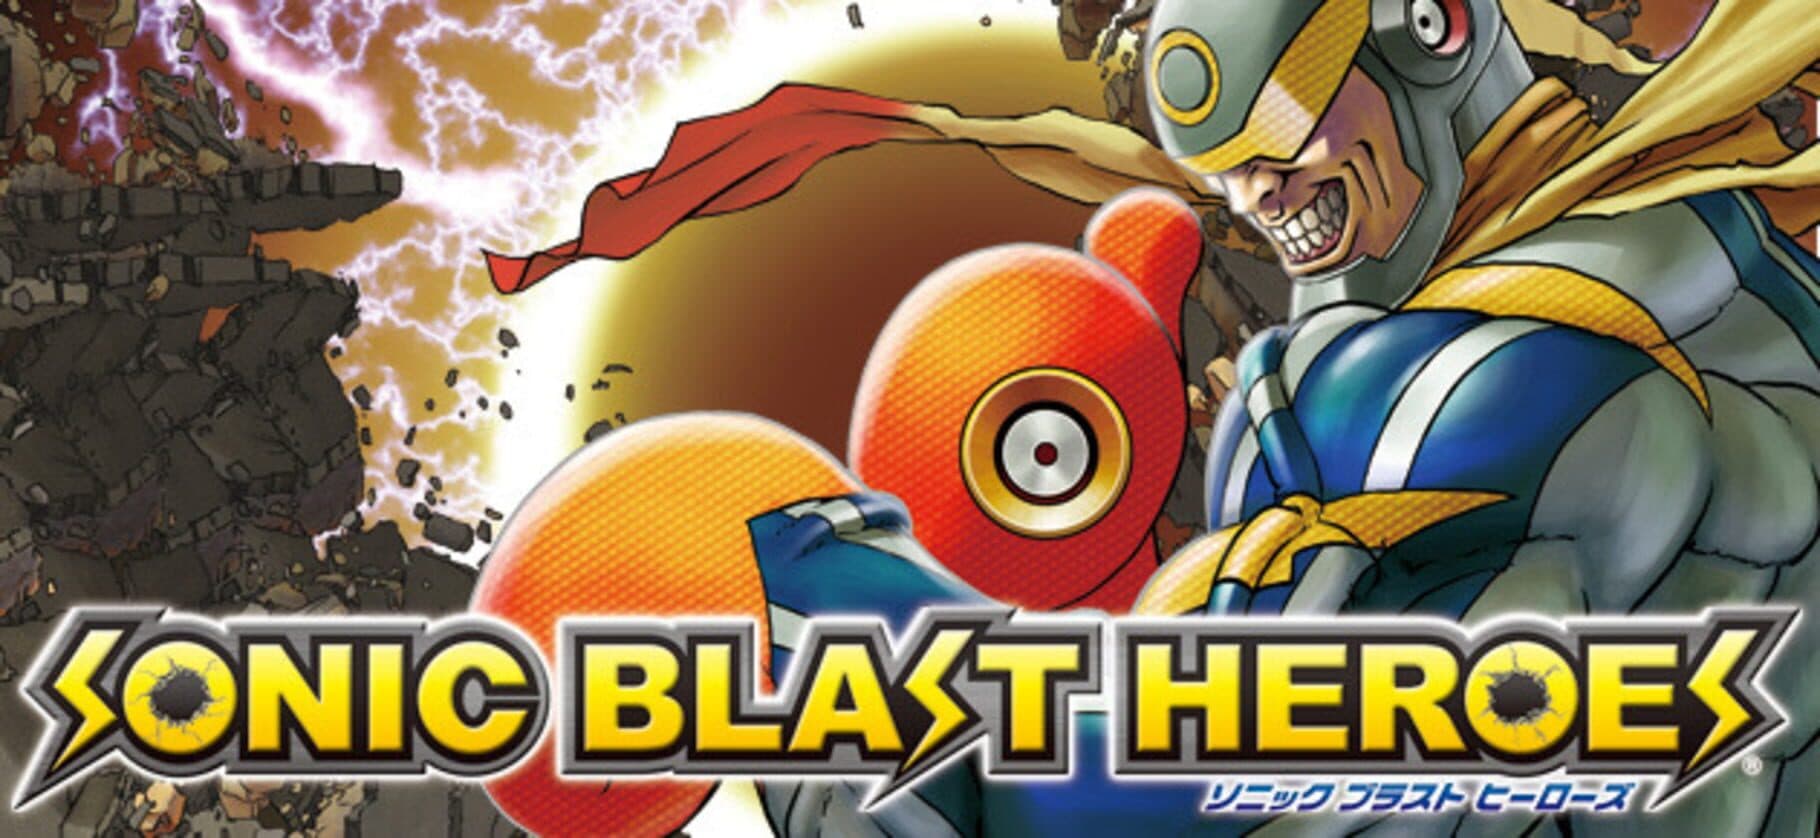 Sonic Blast Heroes cover art